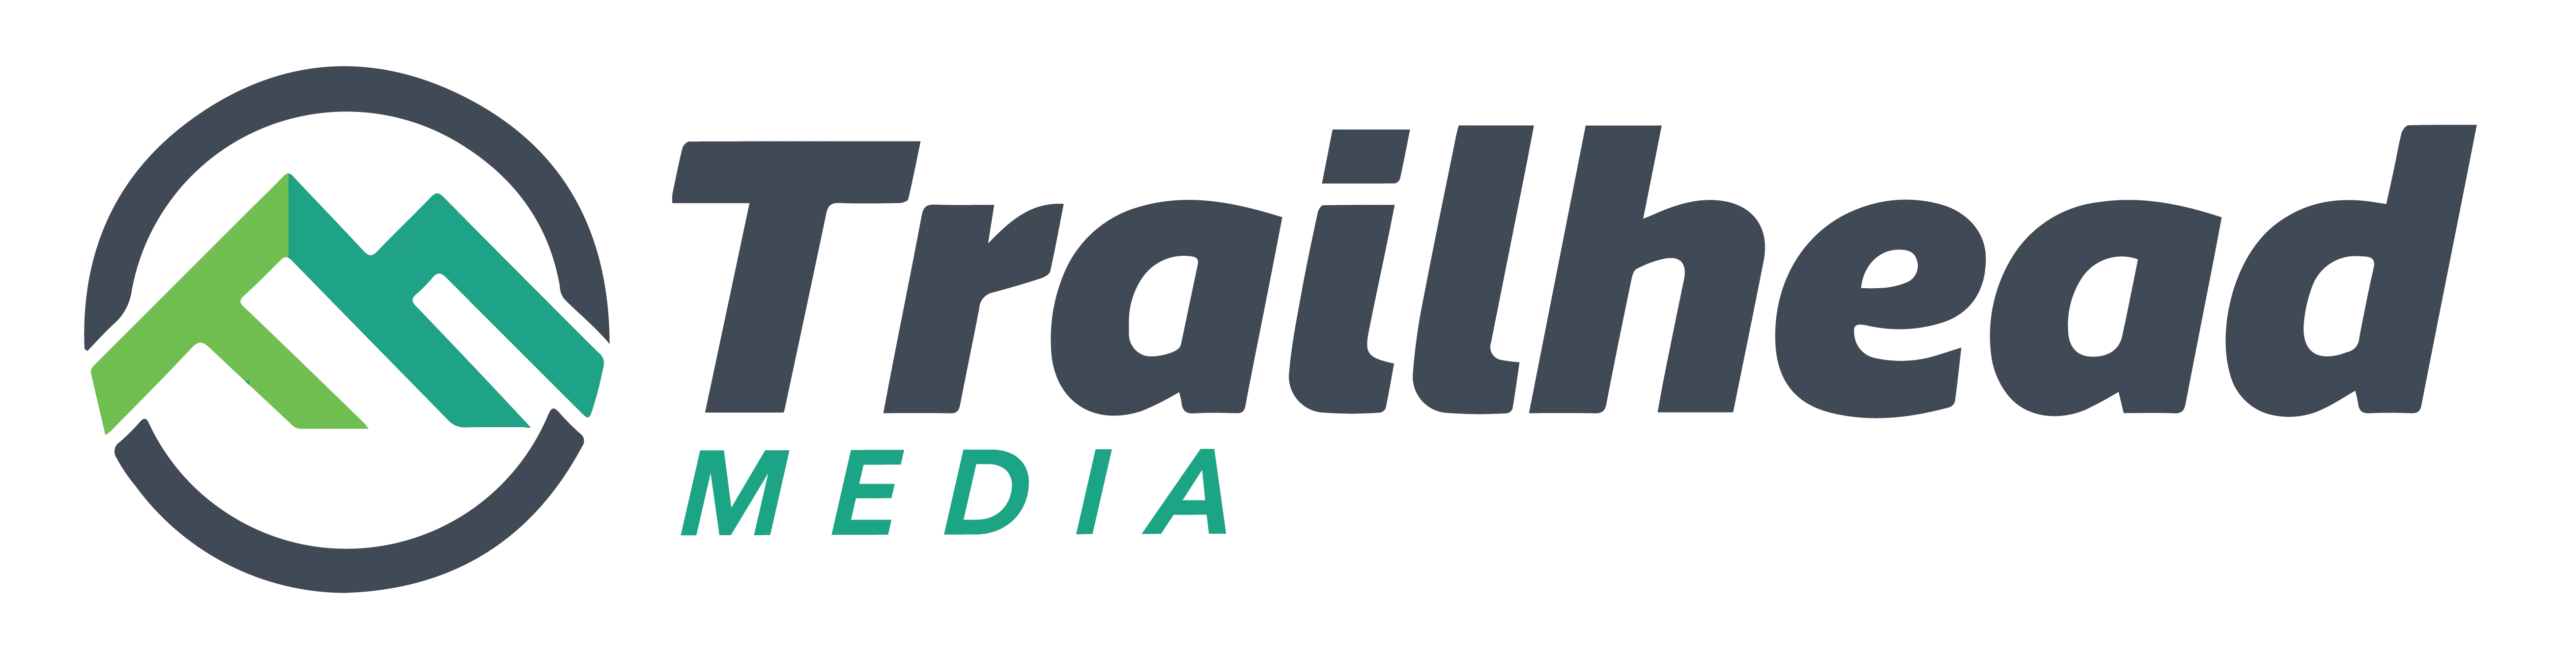 trailhead gray logo